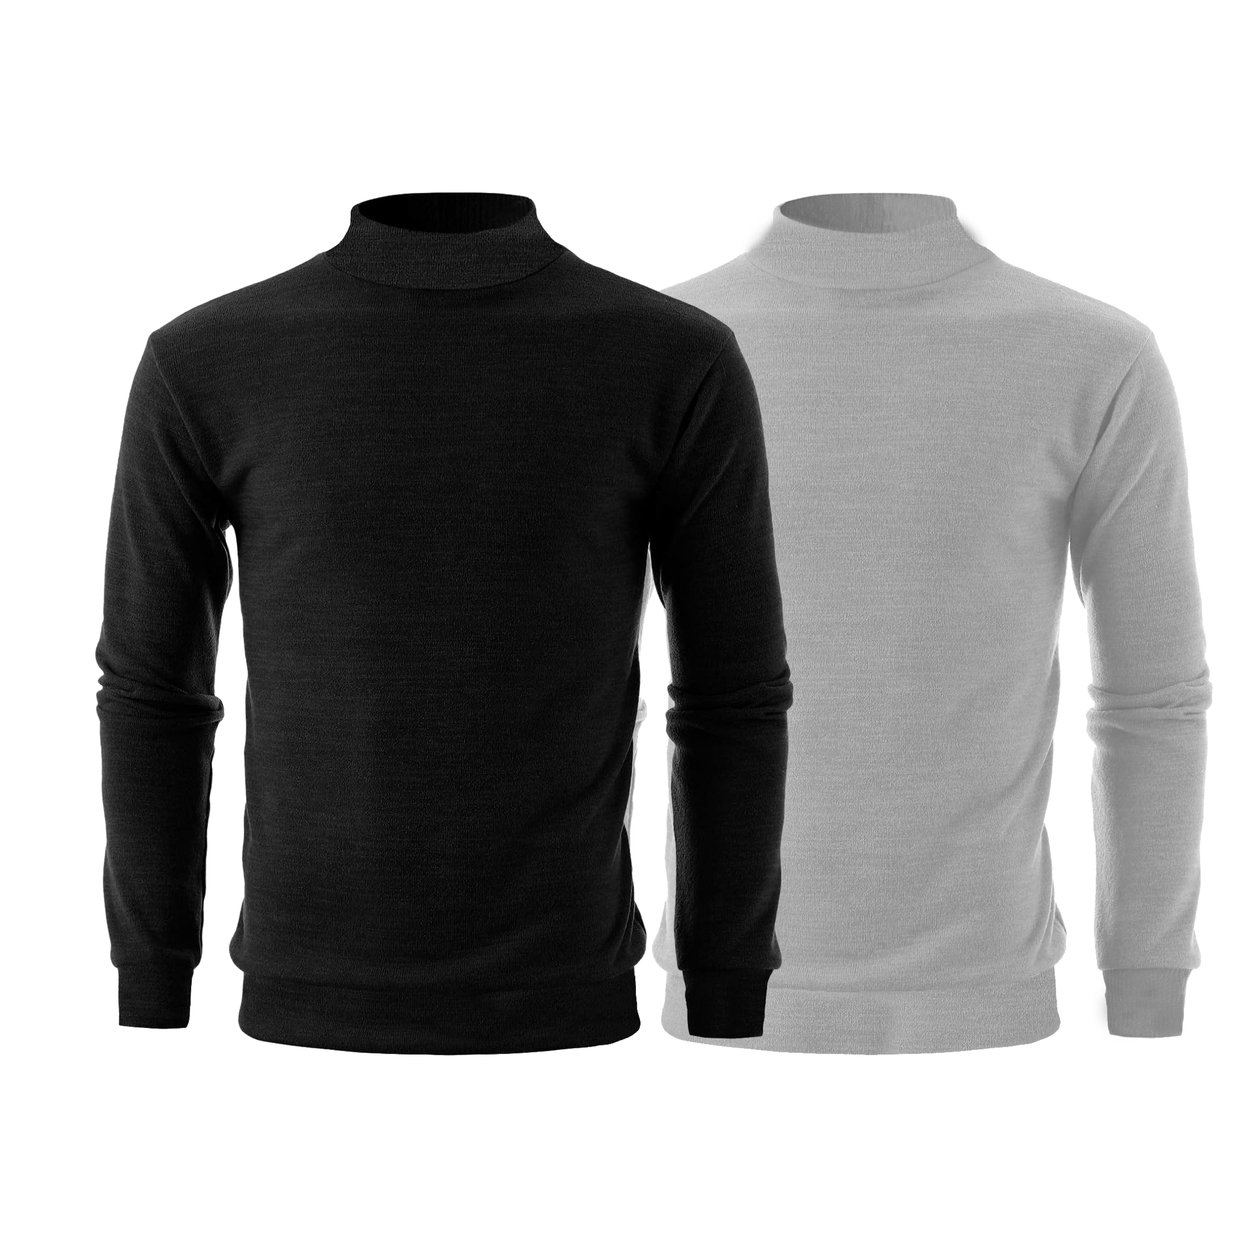 2-Pack: Men's Winter Warm Cozy Knit Slim Fit Mock Neck Sweater - Black& Burgundy, Medium